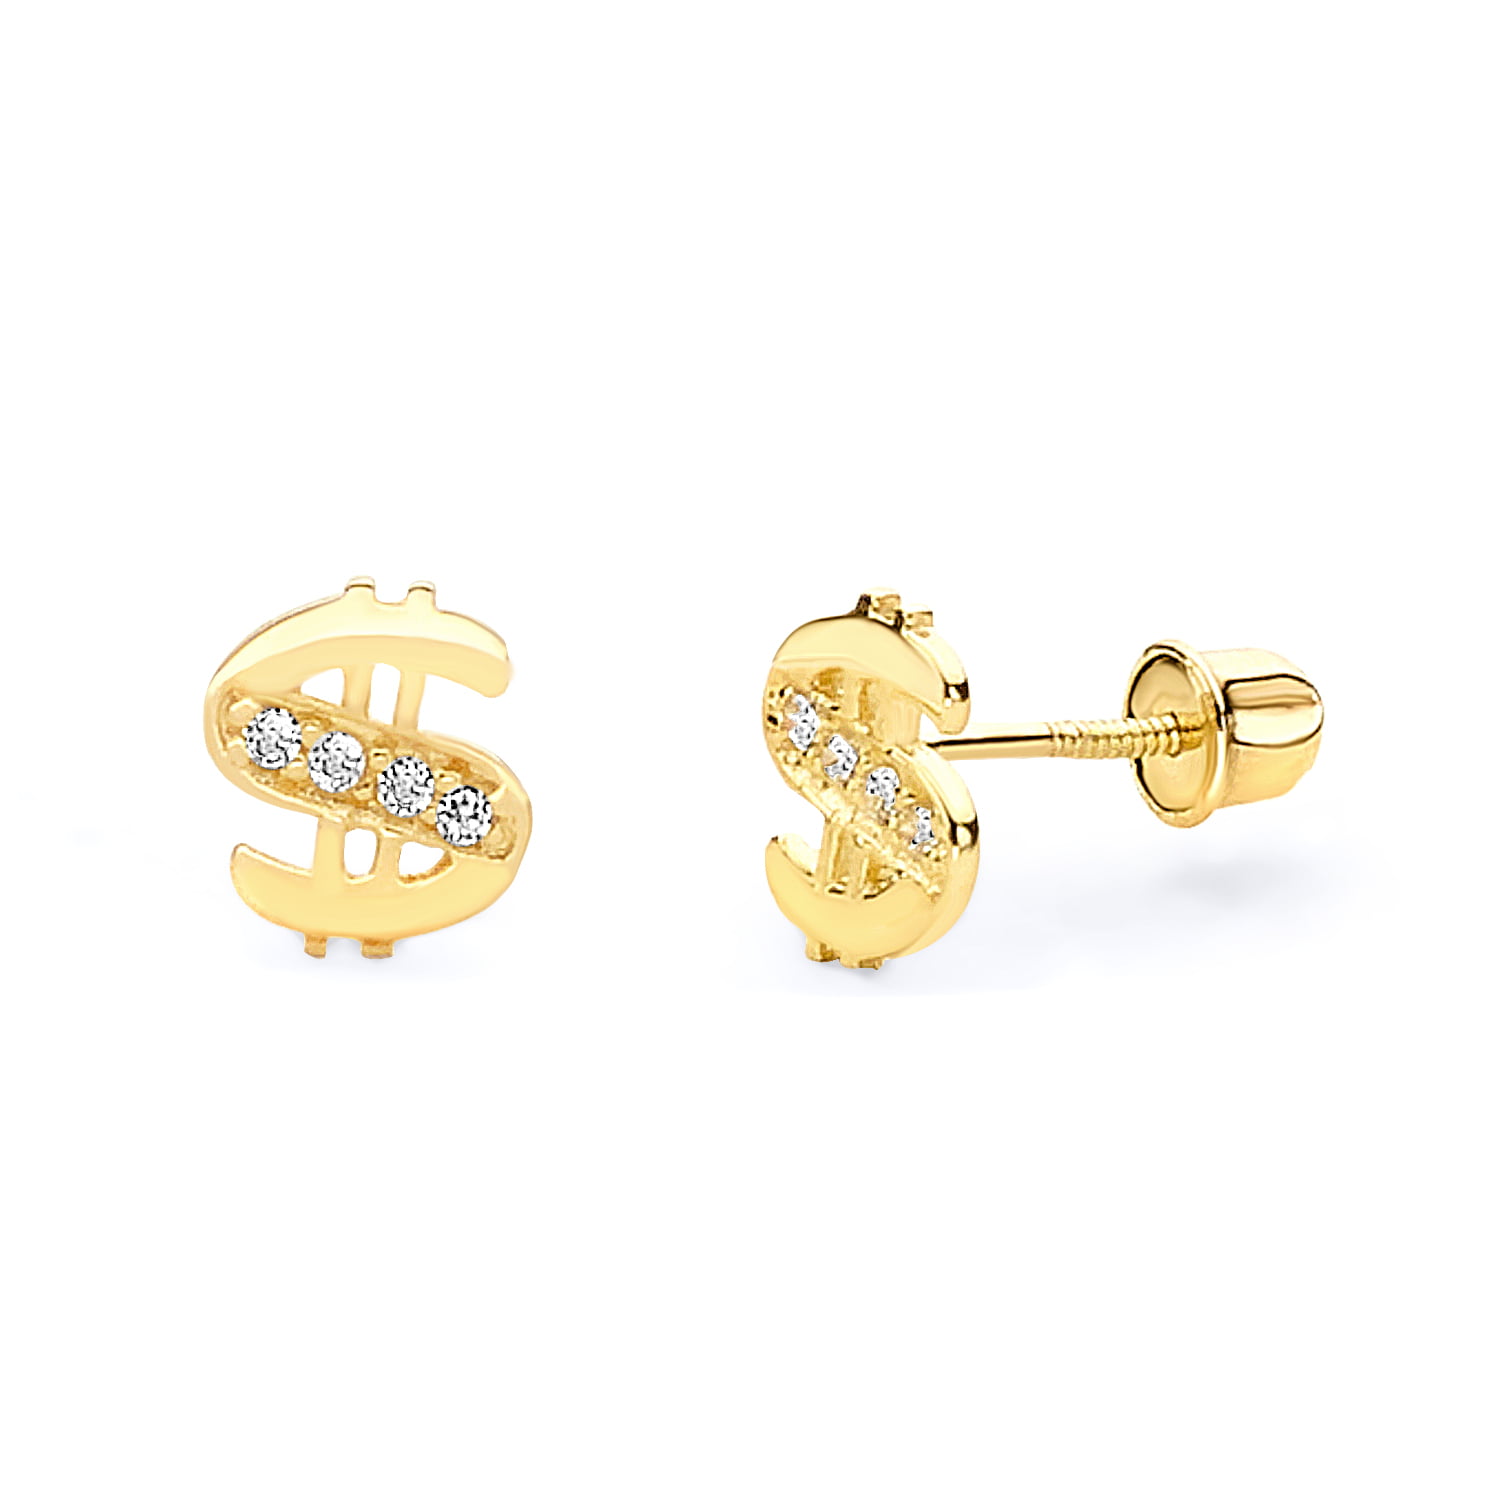 Wellingsale - Wellingsale 14K Yellow Gold Polished $ Stud Earrings With ...